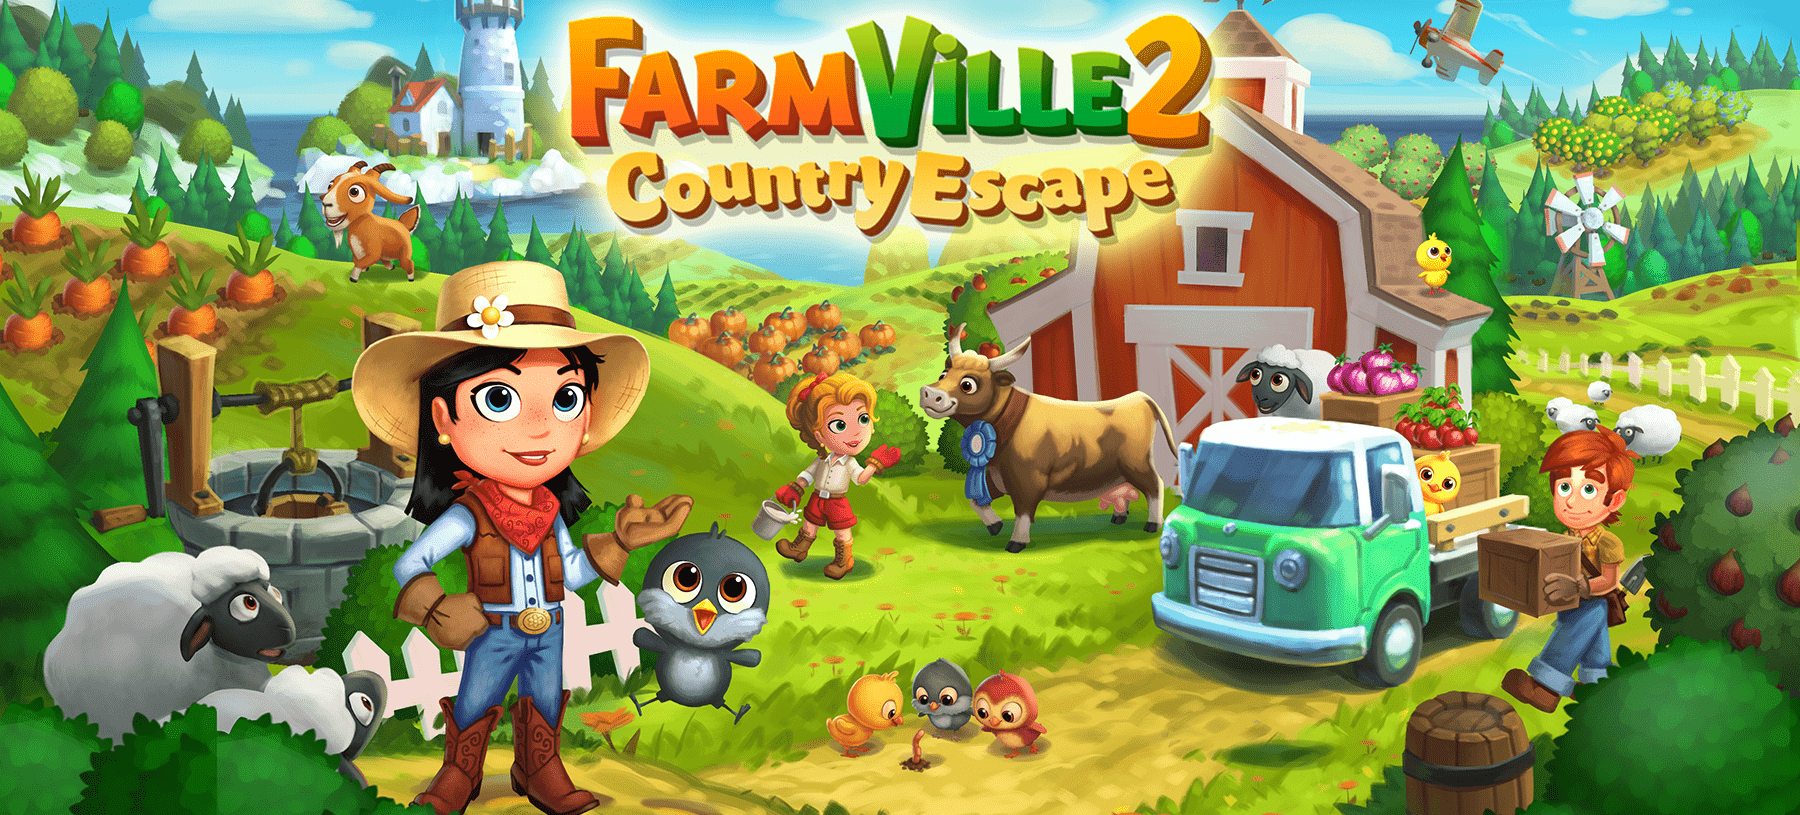 download farmville 2 for pc